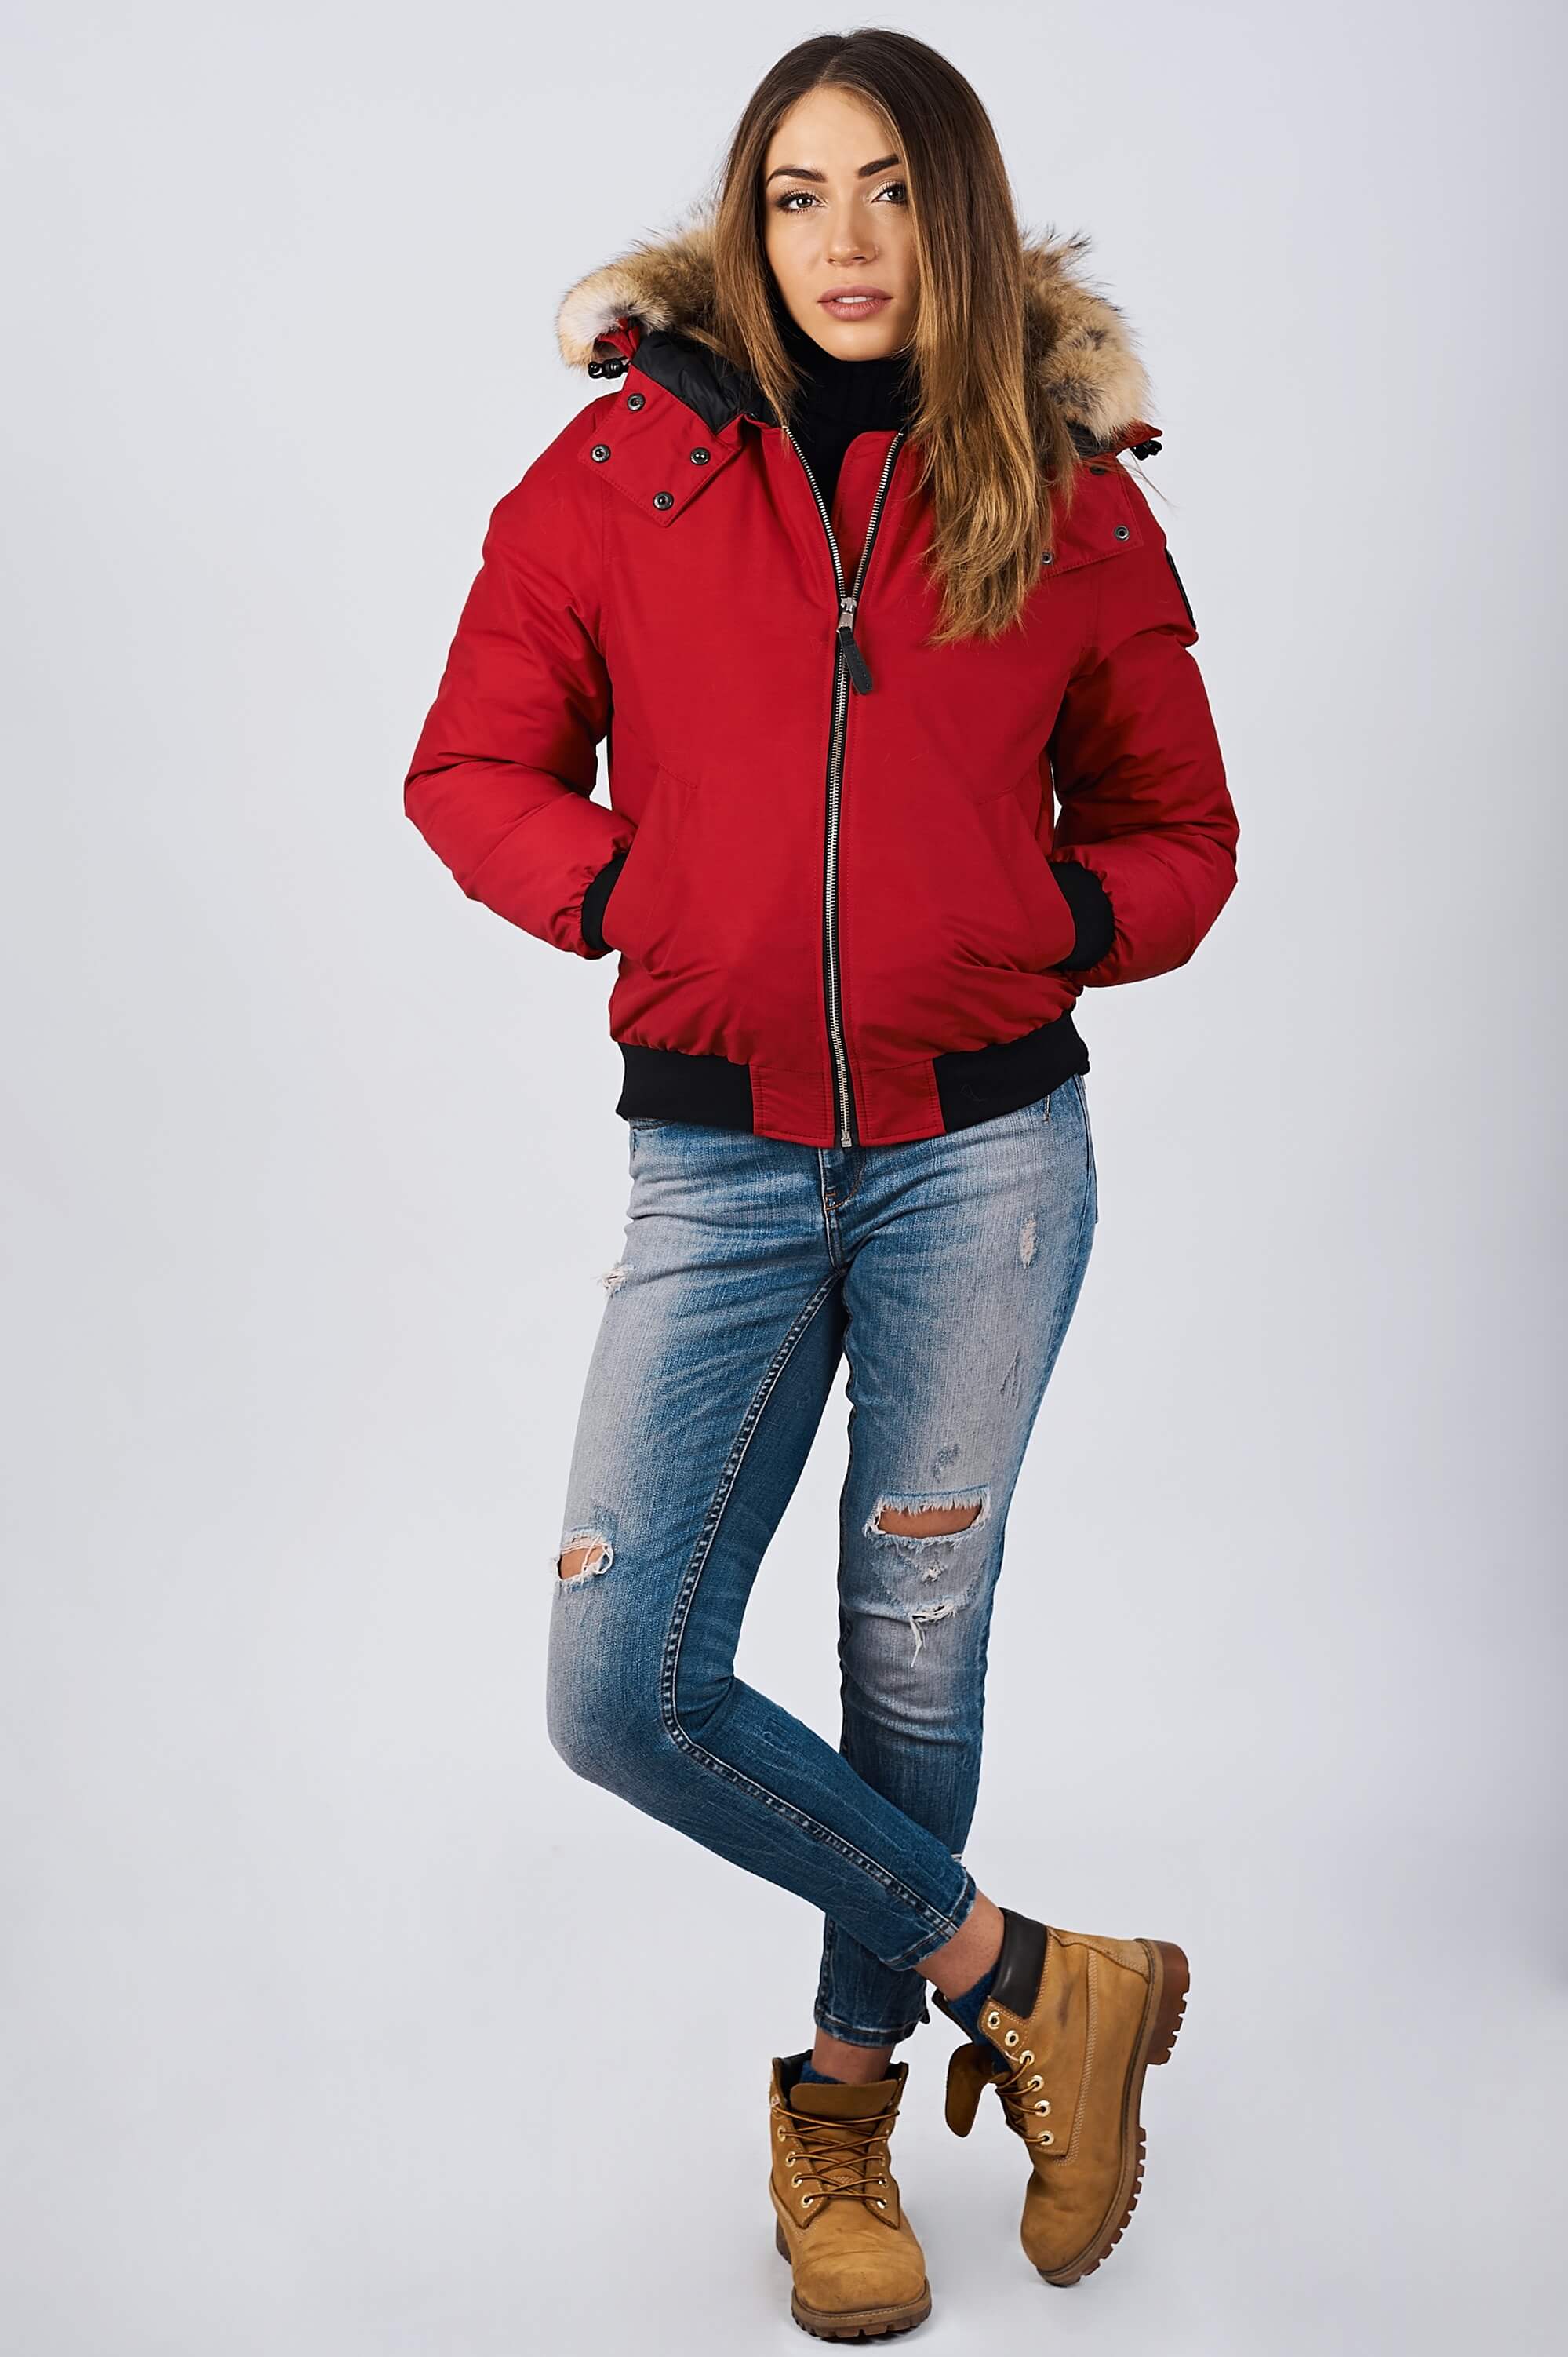 Women's Winter Jacket - Pearson Parka | Parka Jacket for Women - Arctic Bay